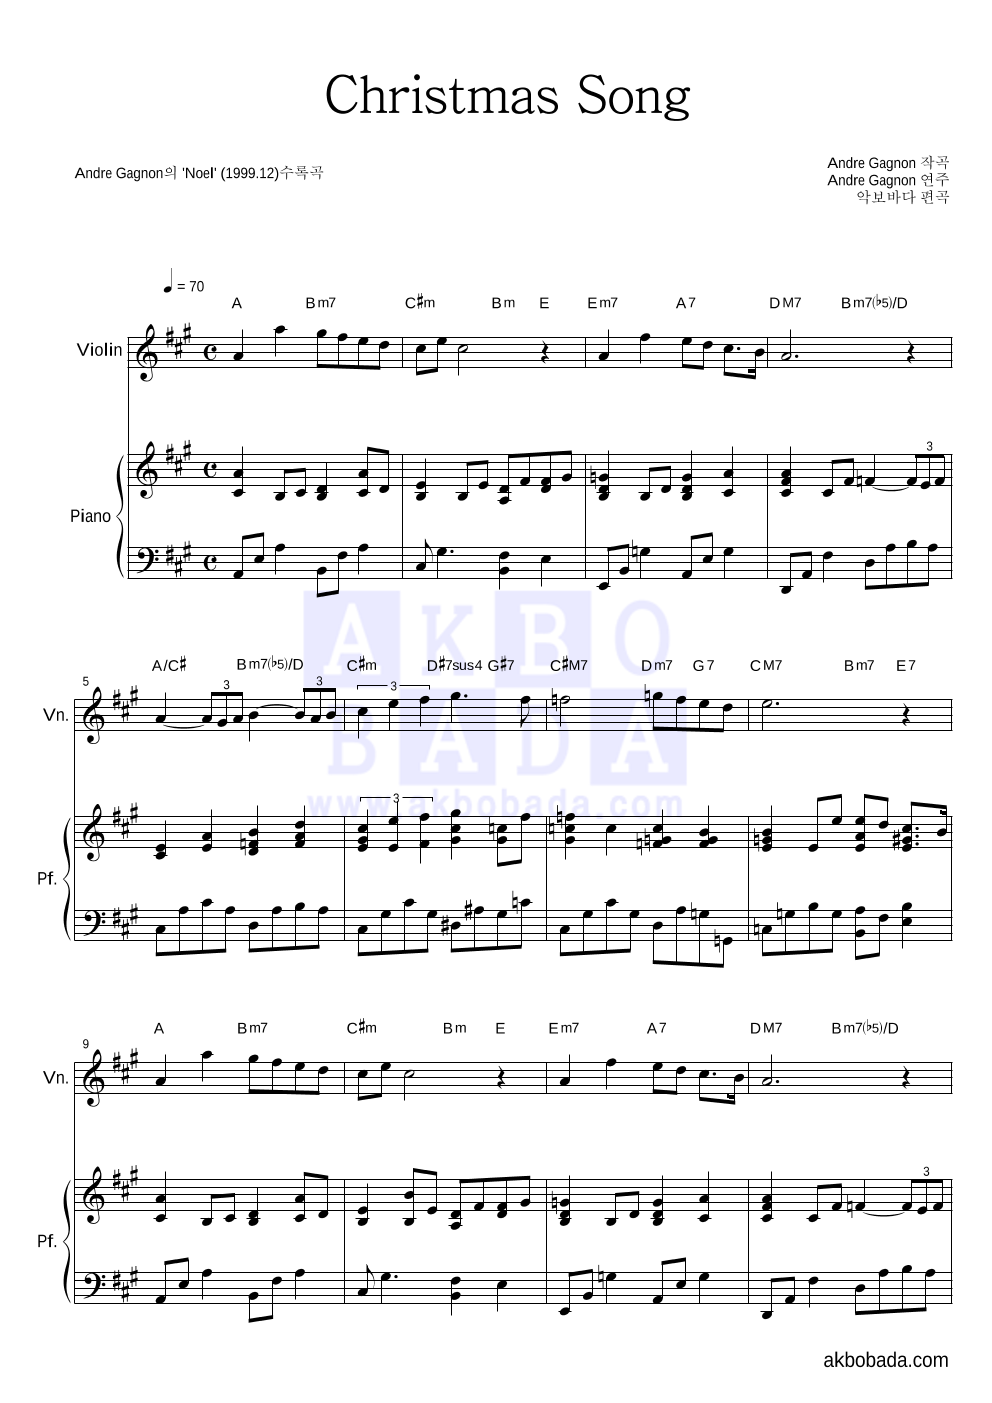 Andre Gagnon - Christmas Song 바이올린&피아노 악보 